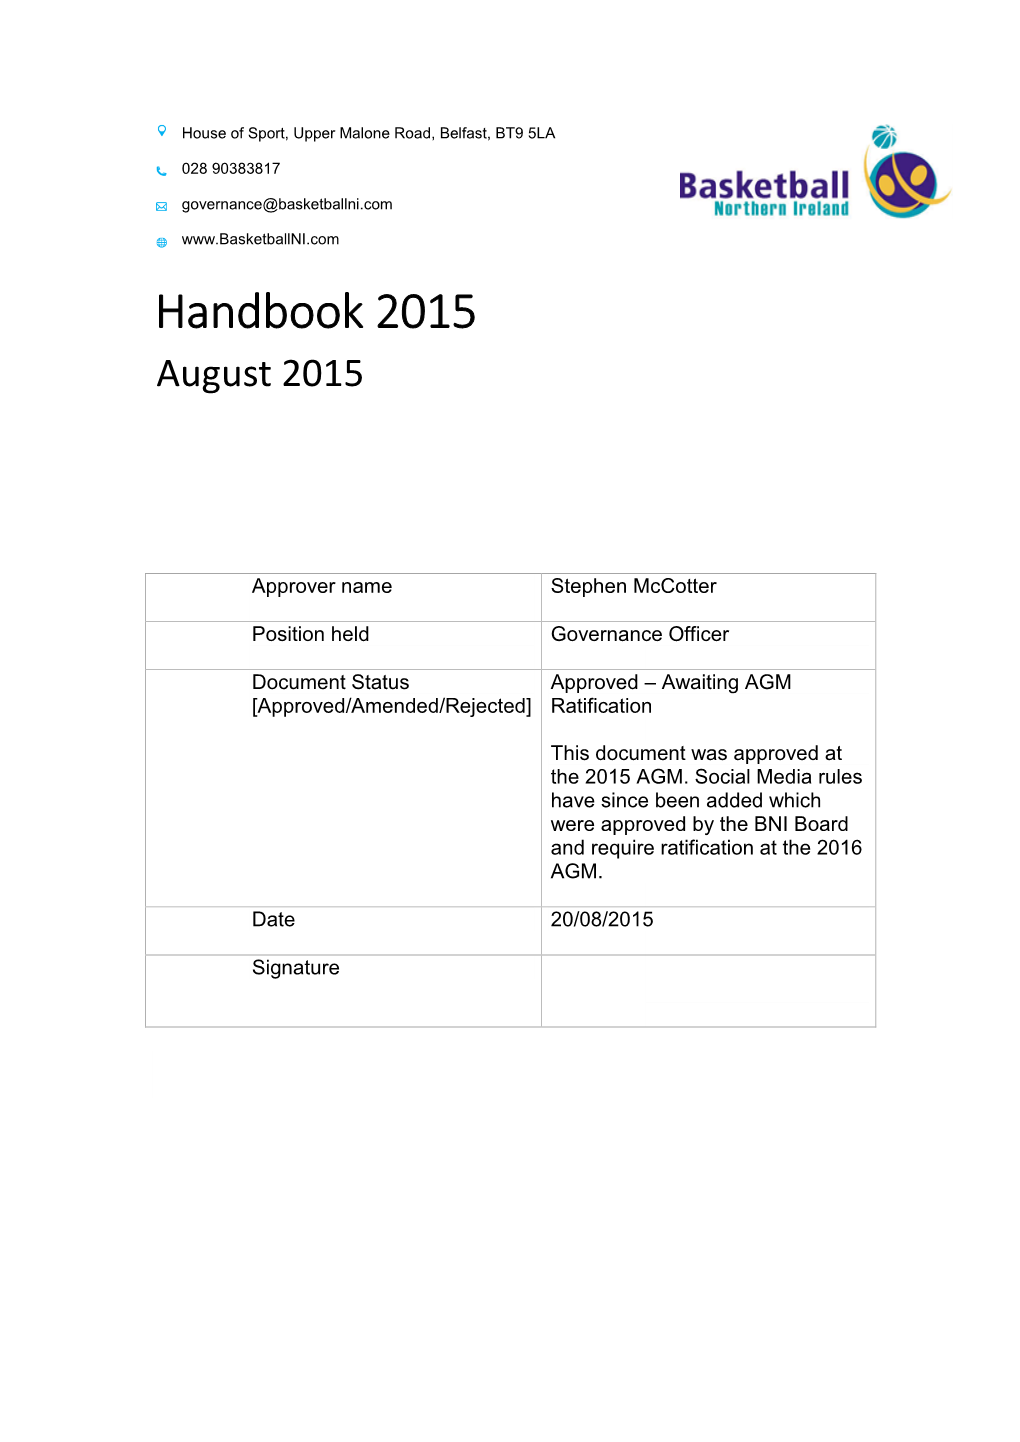 Handbook 2015